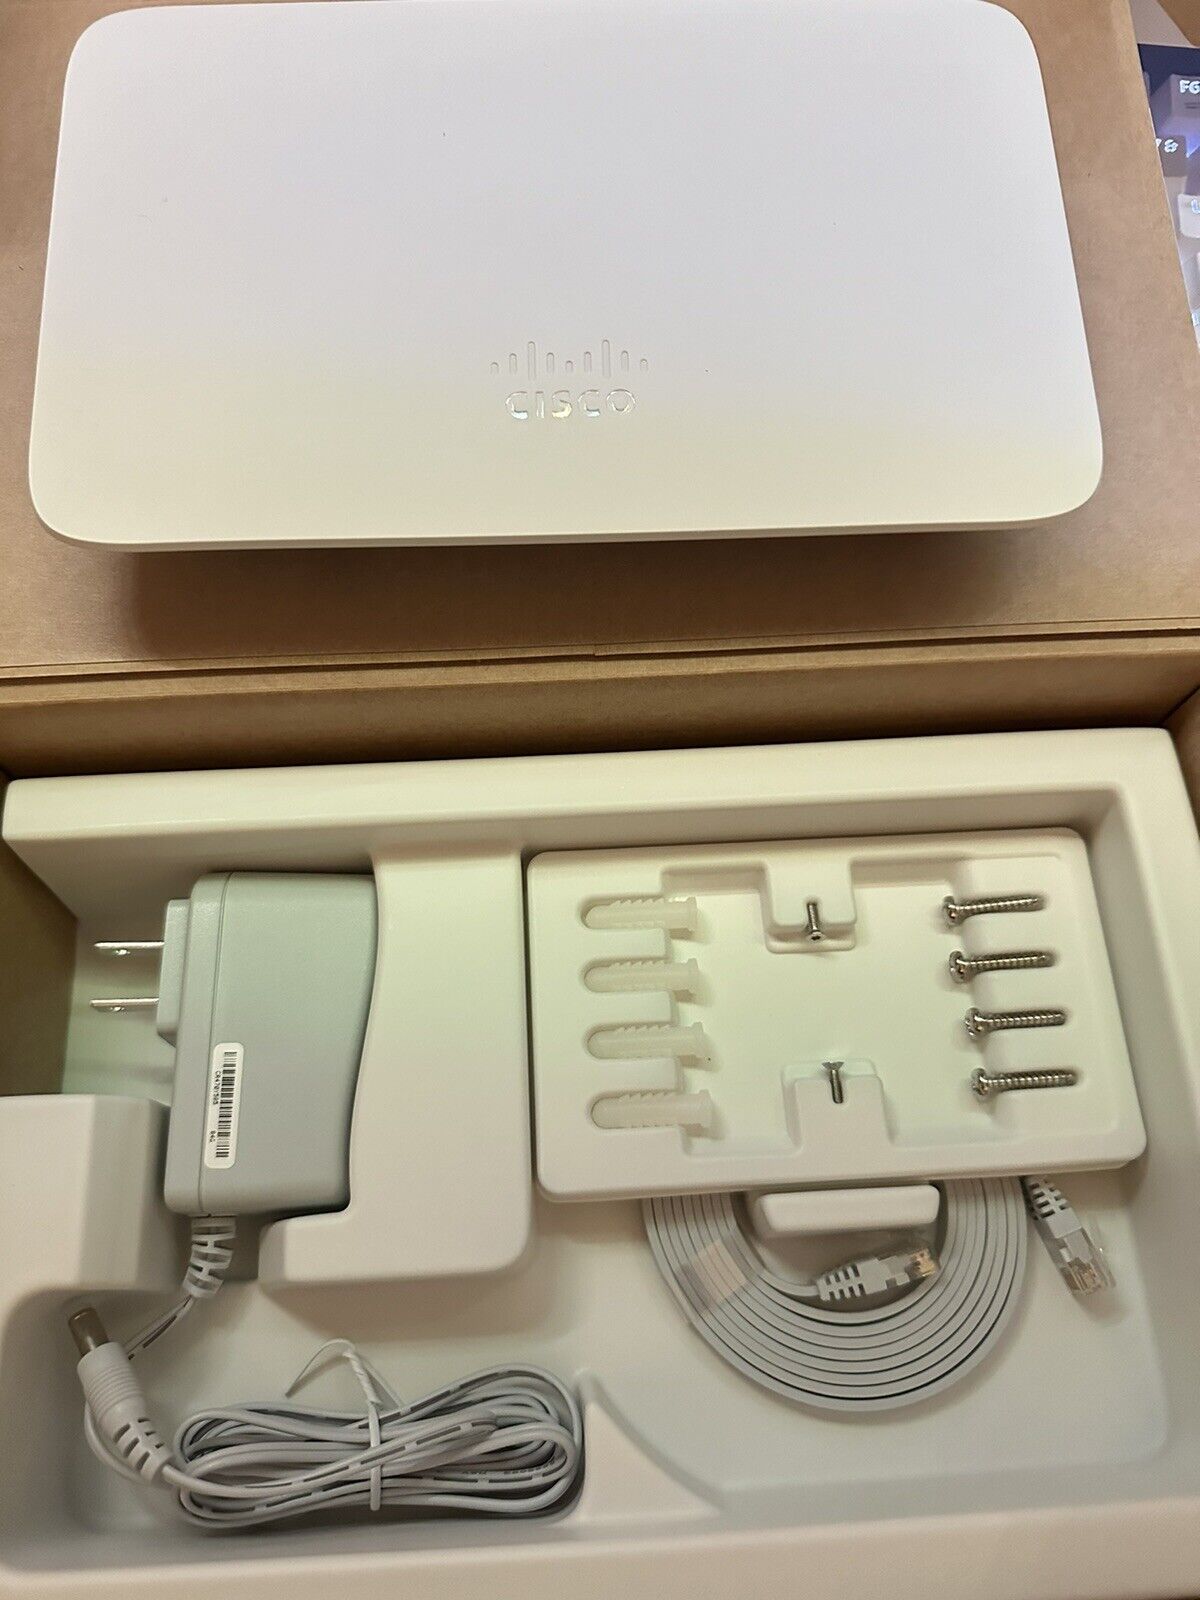 Cisco GR10-HW-US 1000 Mbps WiFi Access Point Indoor MERAKI GO